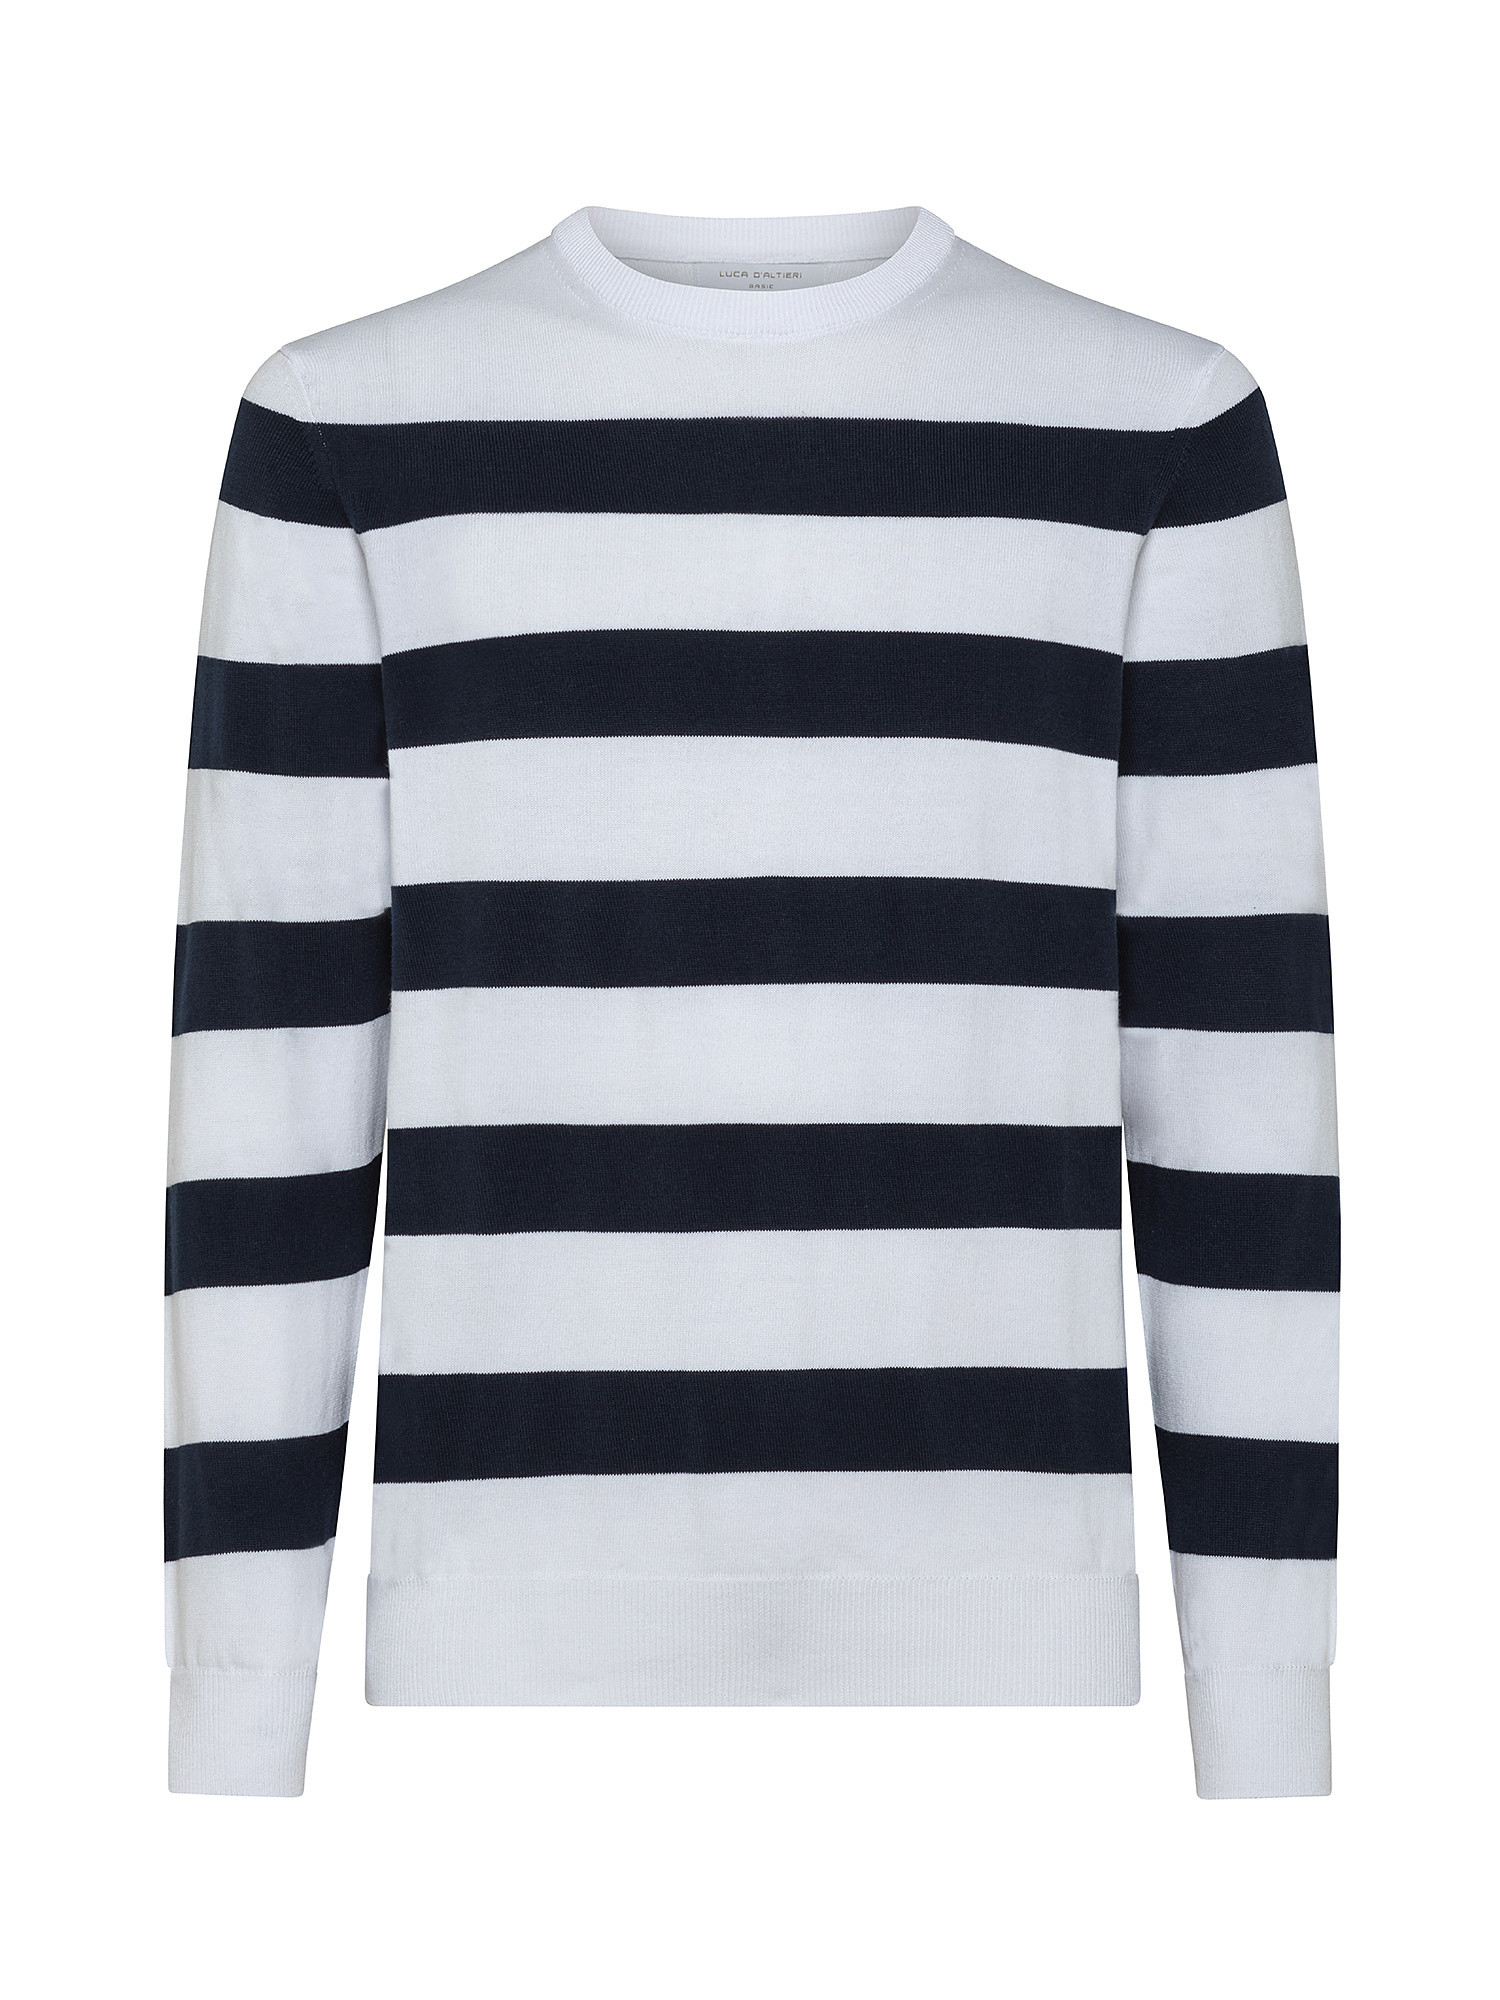 Striped cotton crewneck sweater, Multicolor, large image number 0